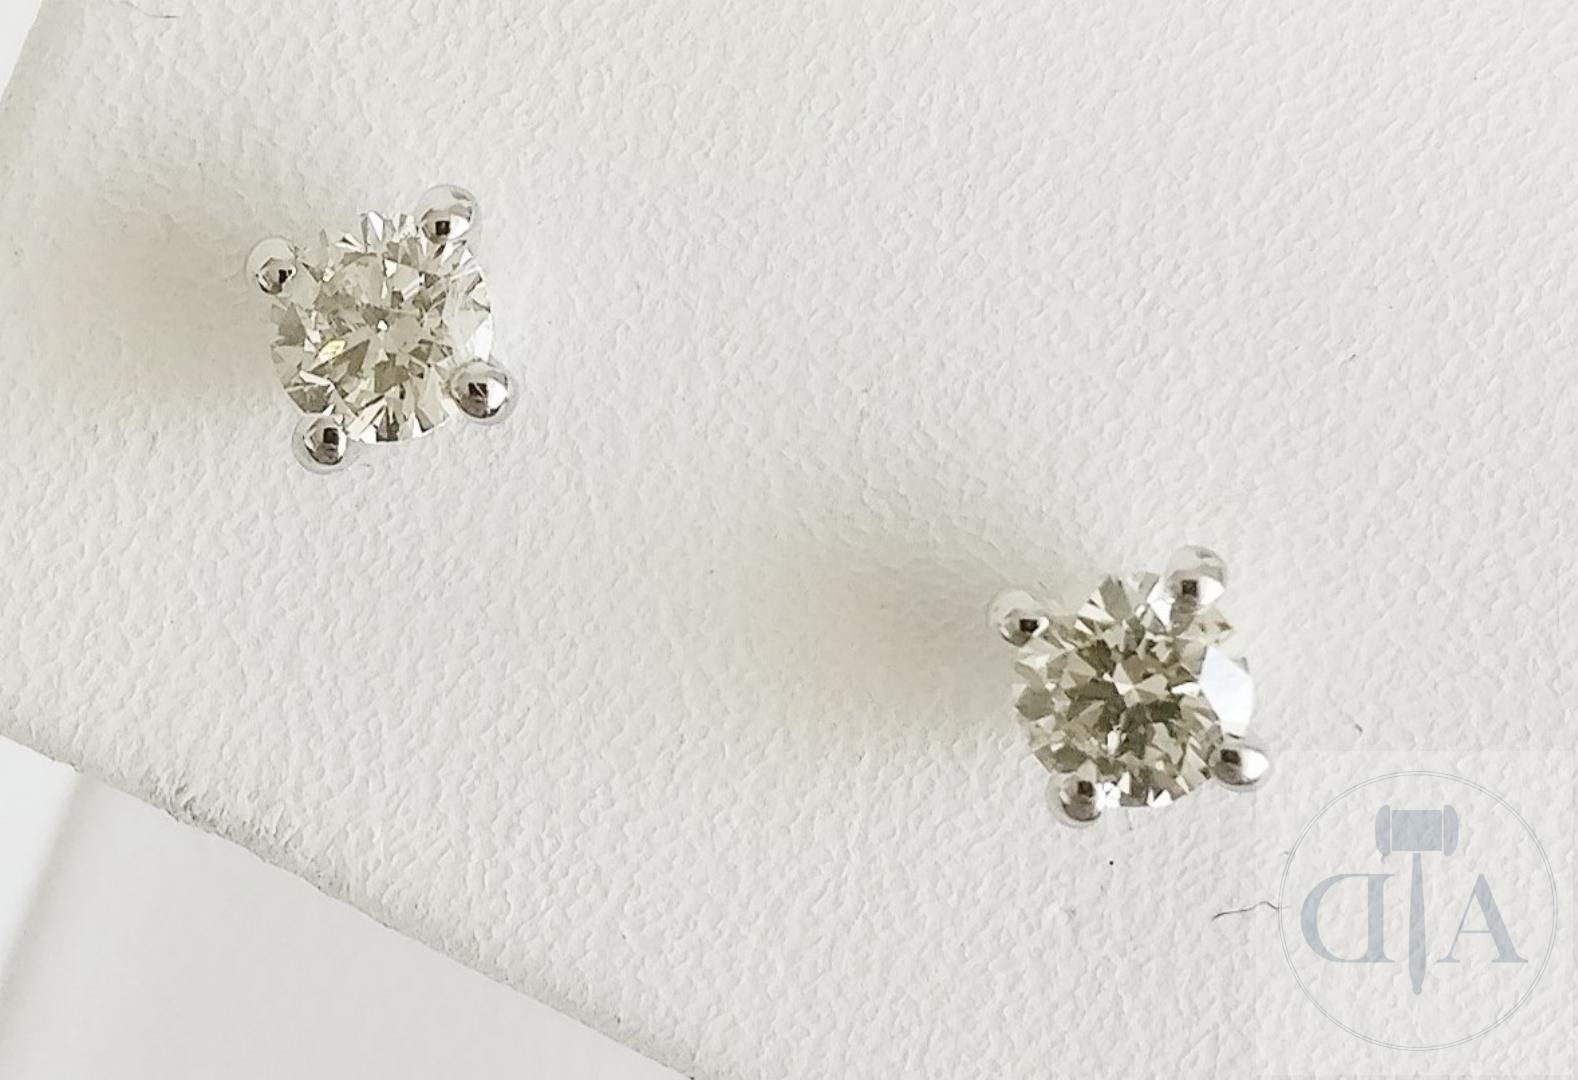 Null 0.62ct Diamond Earrings
- Material: 18 kt. White Gold
- Gross Weight: 1.25 &hellip;